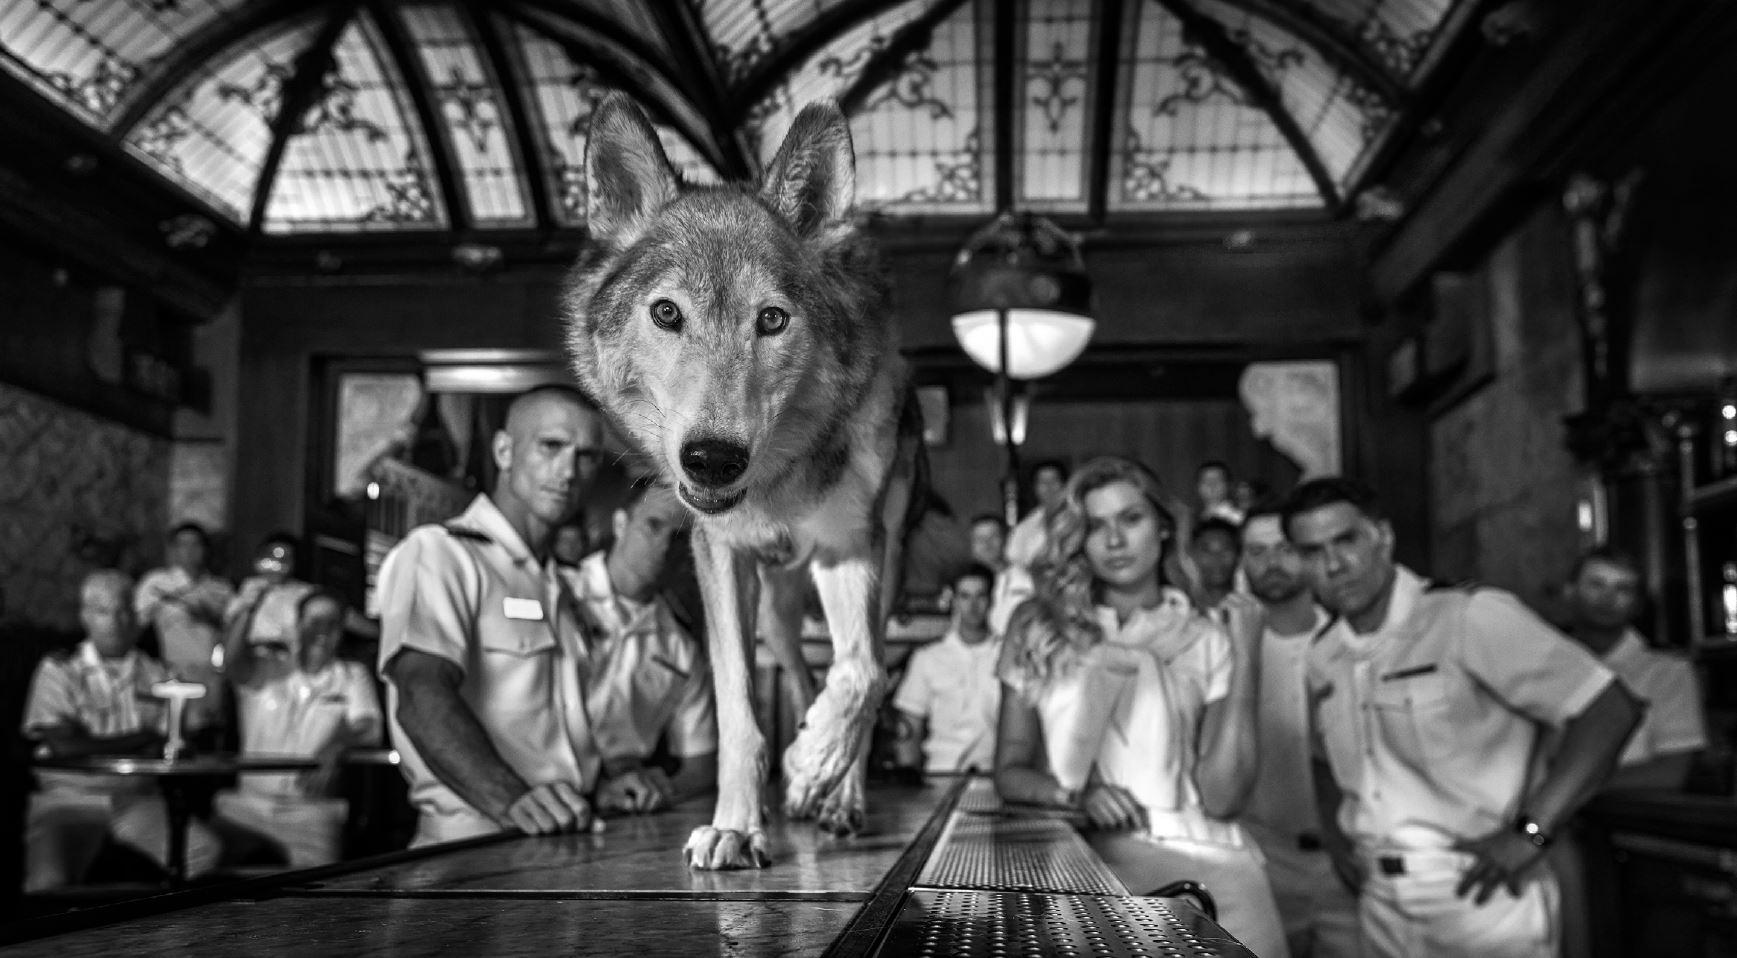 David Yarrow Black and White Photograph - 'Top Gun' - Barscene with wolf, fine art photography, 2023